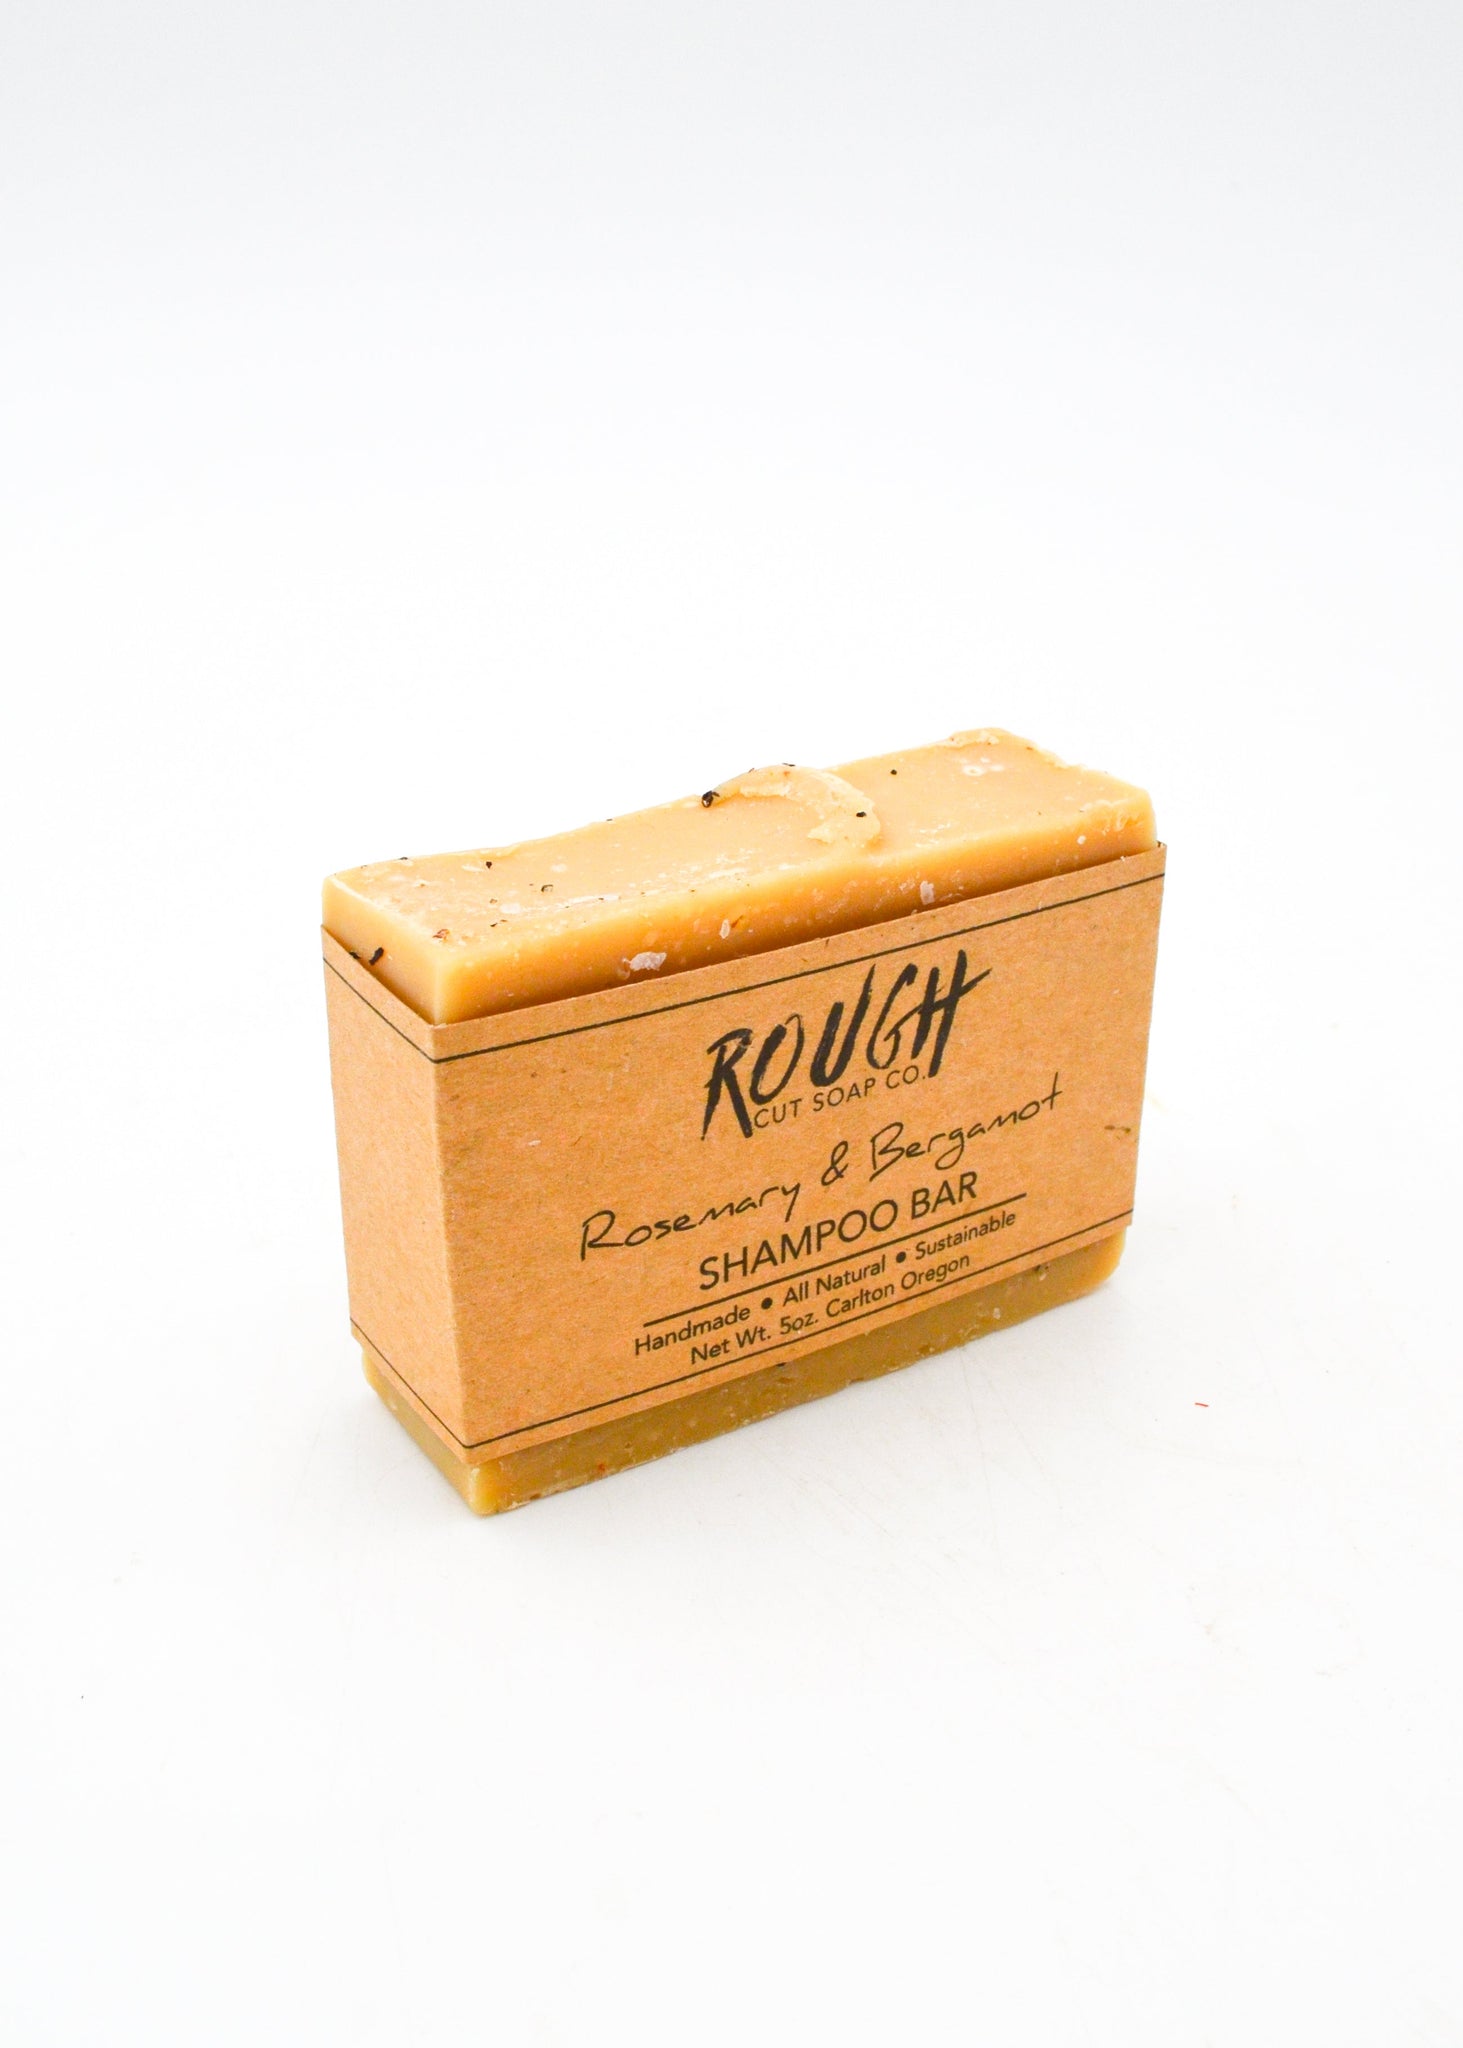 Handmade Rough Cut Soap Shampoo Bars (2 scents) - Rosemary + Bergamot - Rough Cut Soaps & Sundries - Wild Lark